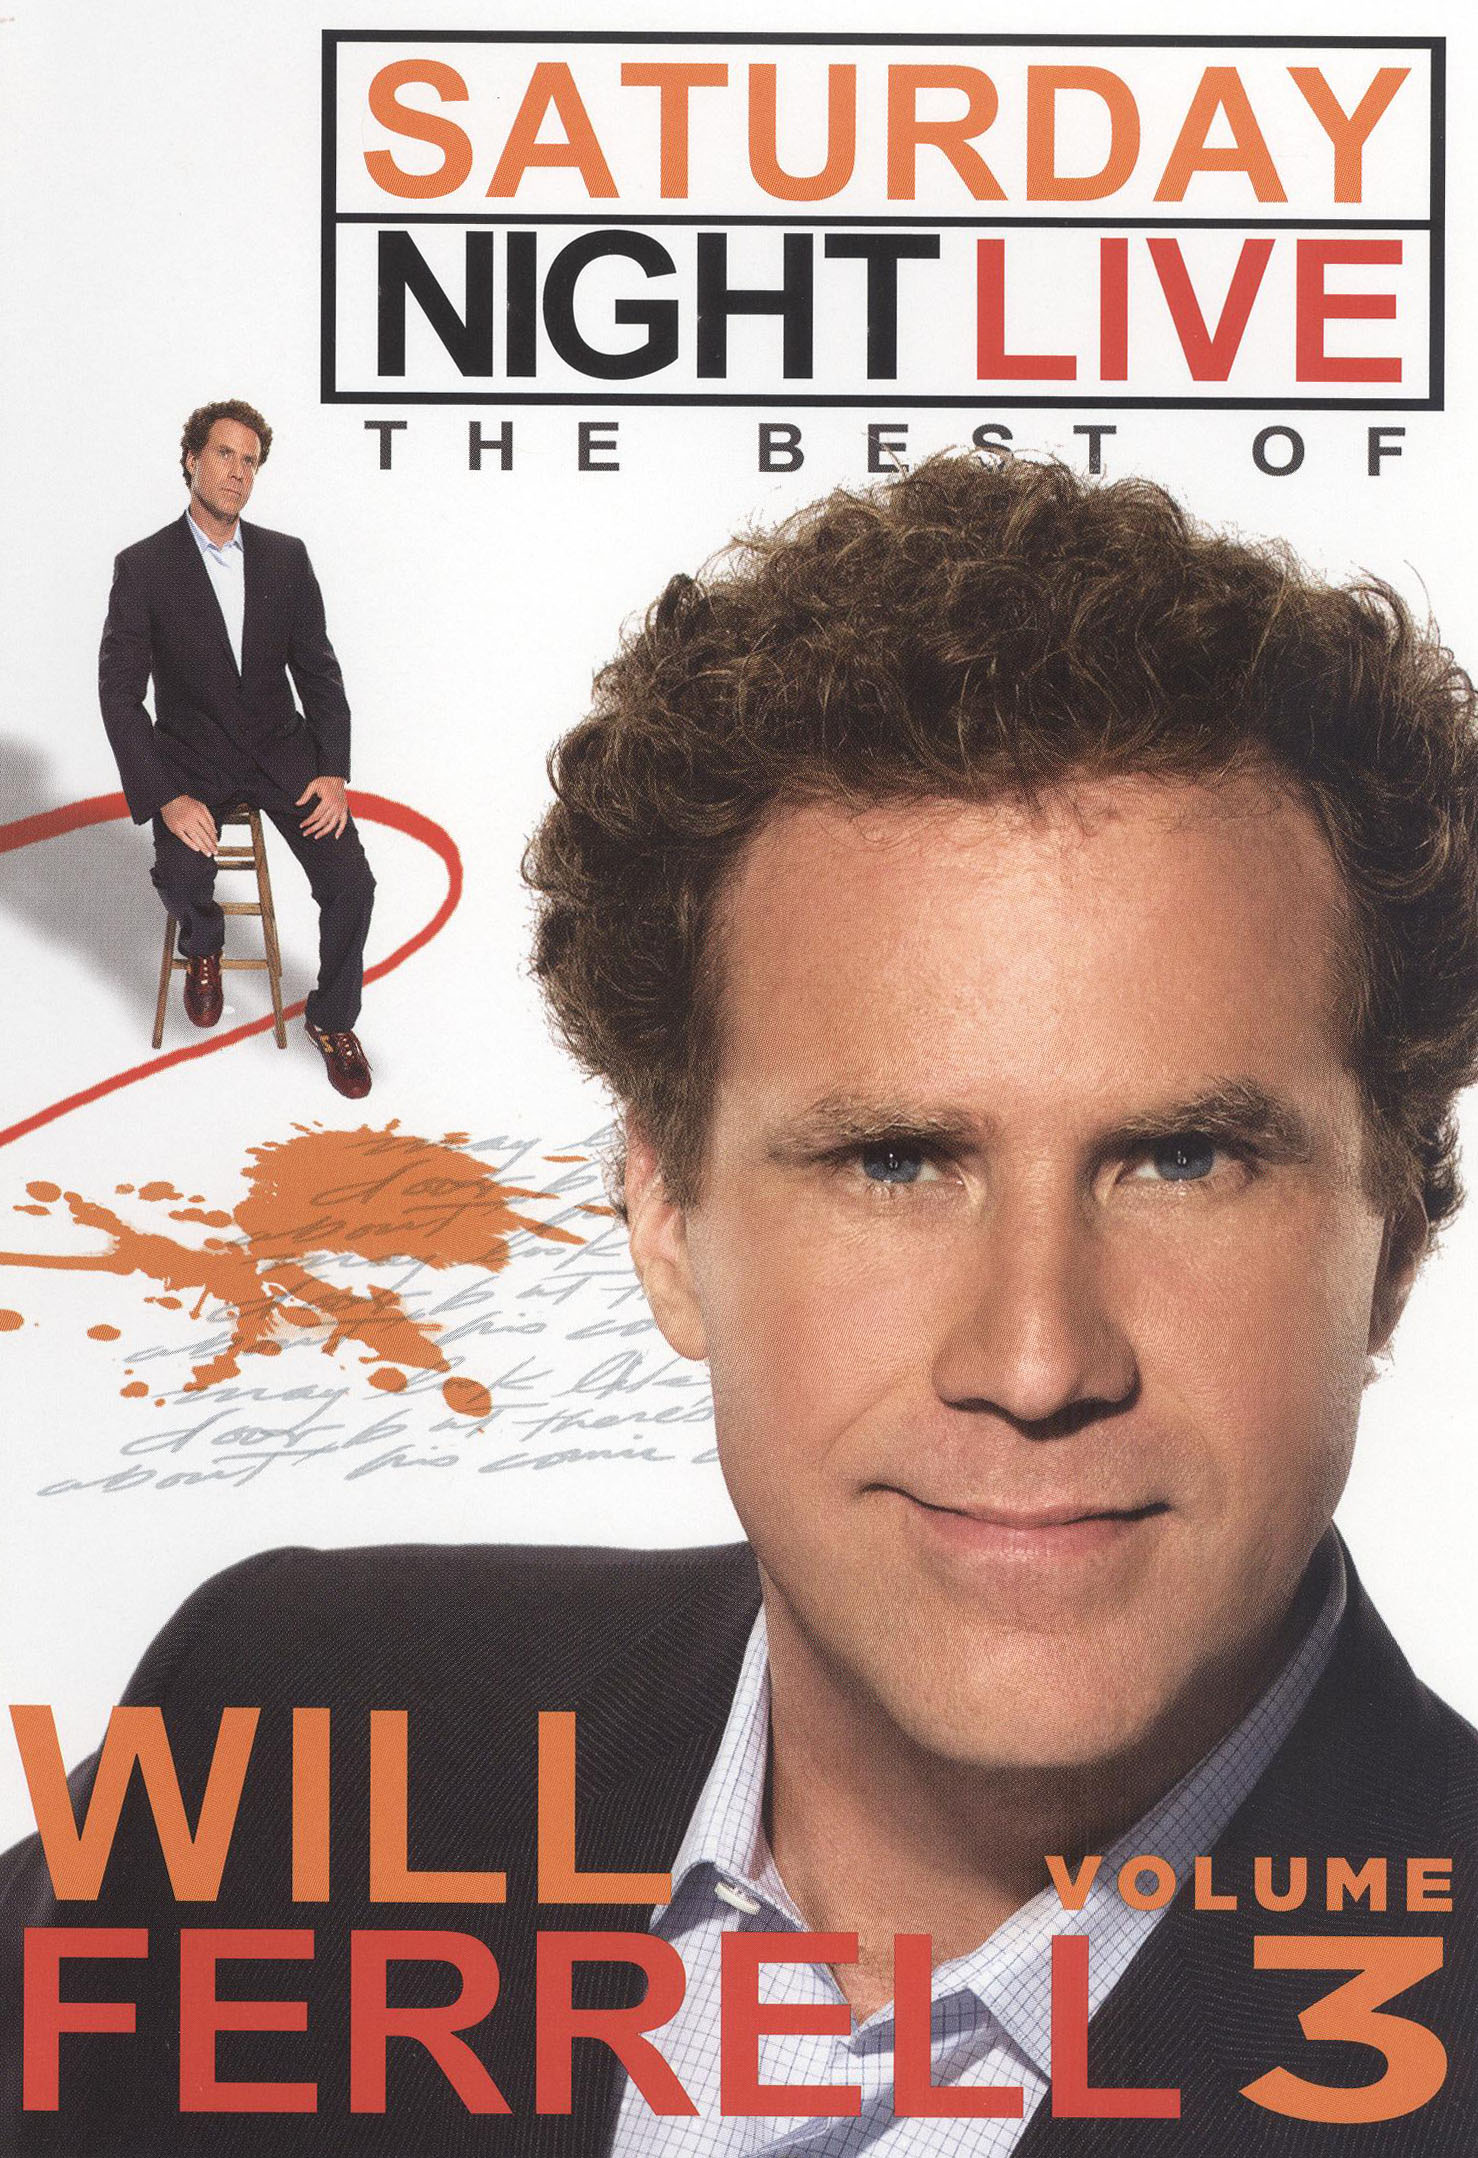 Saturday Night Live The Best Of Will Ferrell Vol 3 Dvd Best Buy